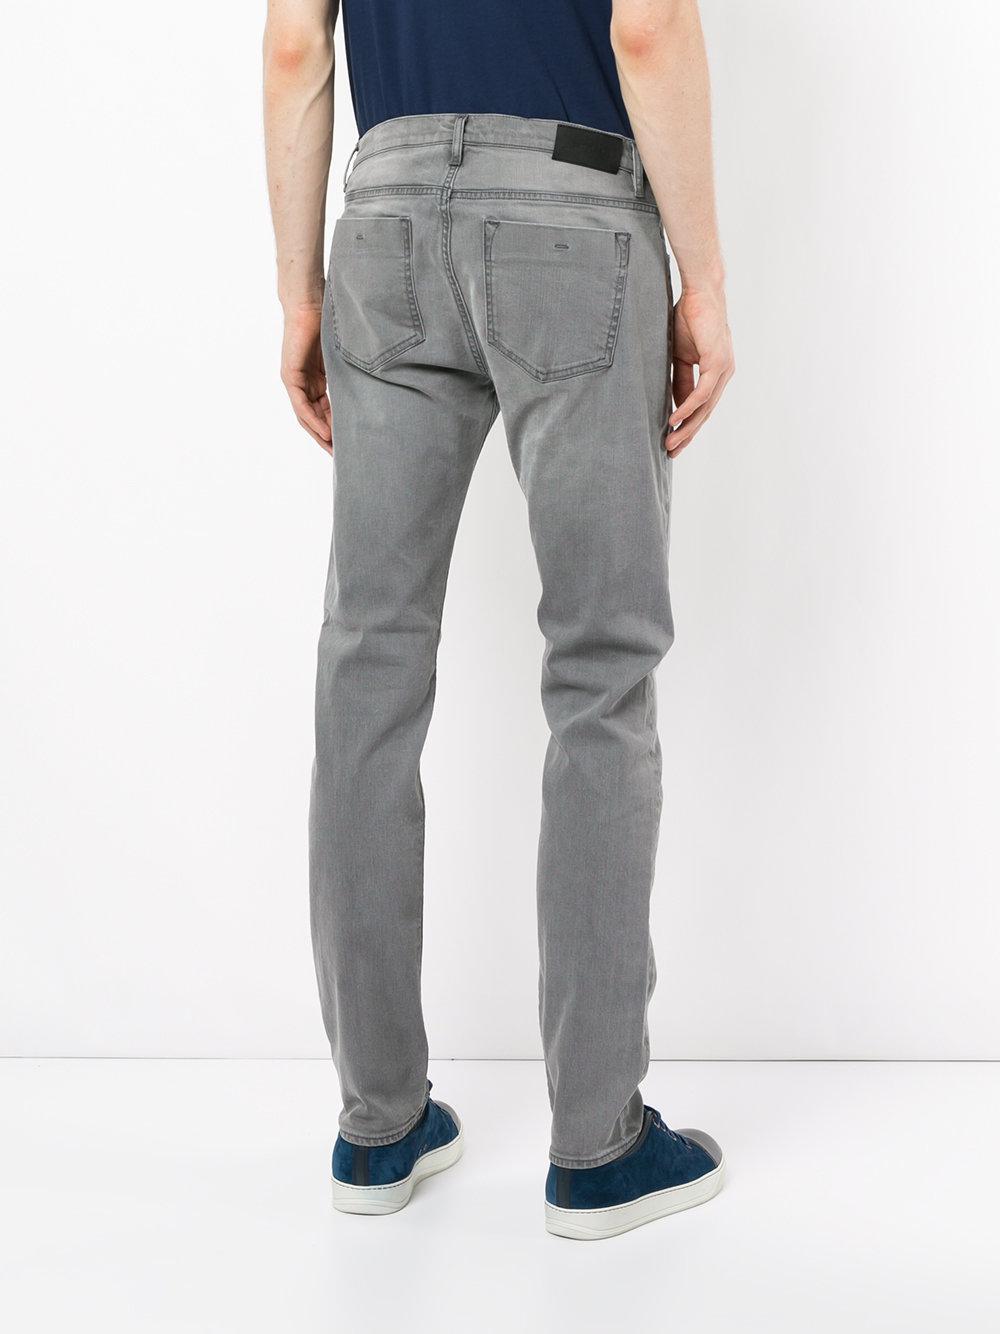 Cerruti 1881 Slim Fit Denim Jeans in Grey (Grey) for Men - Lyst